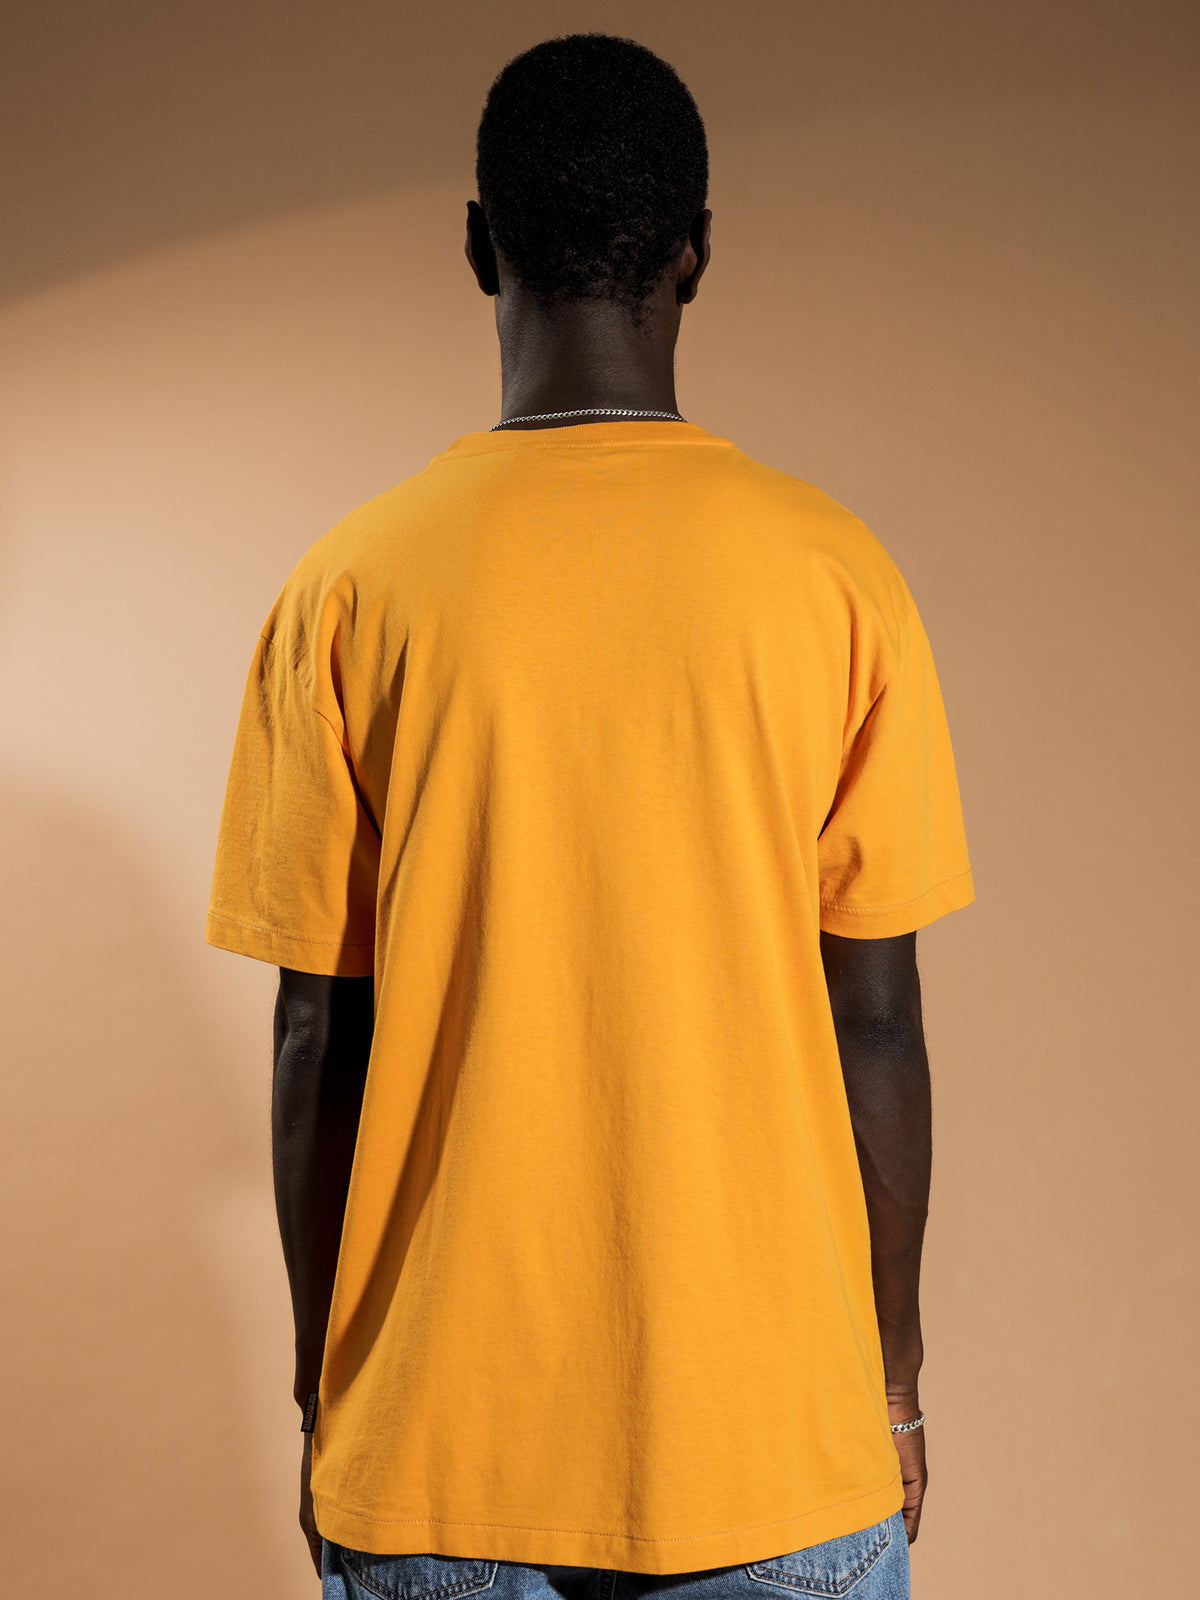 Box Logo T-Shirt in Yellow